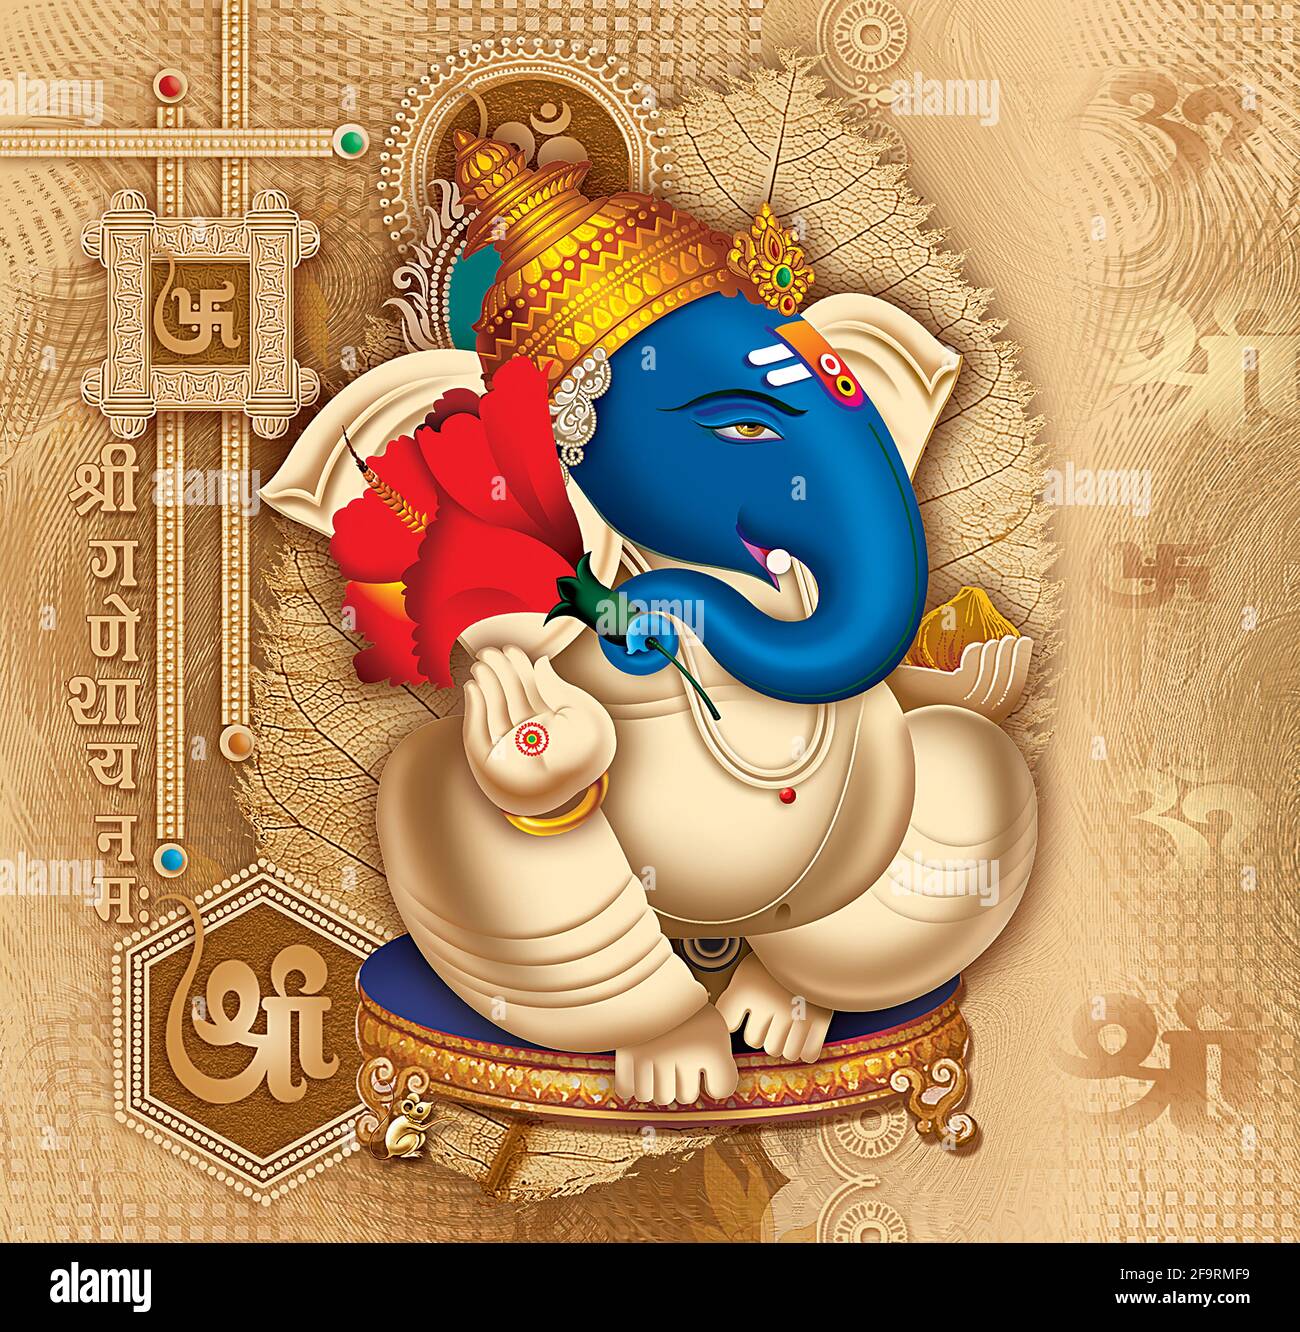 High Resolution Indian Gods Lord Ganesha Digital Painting Stock ...